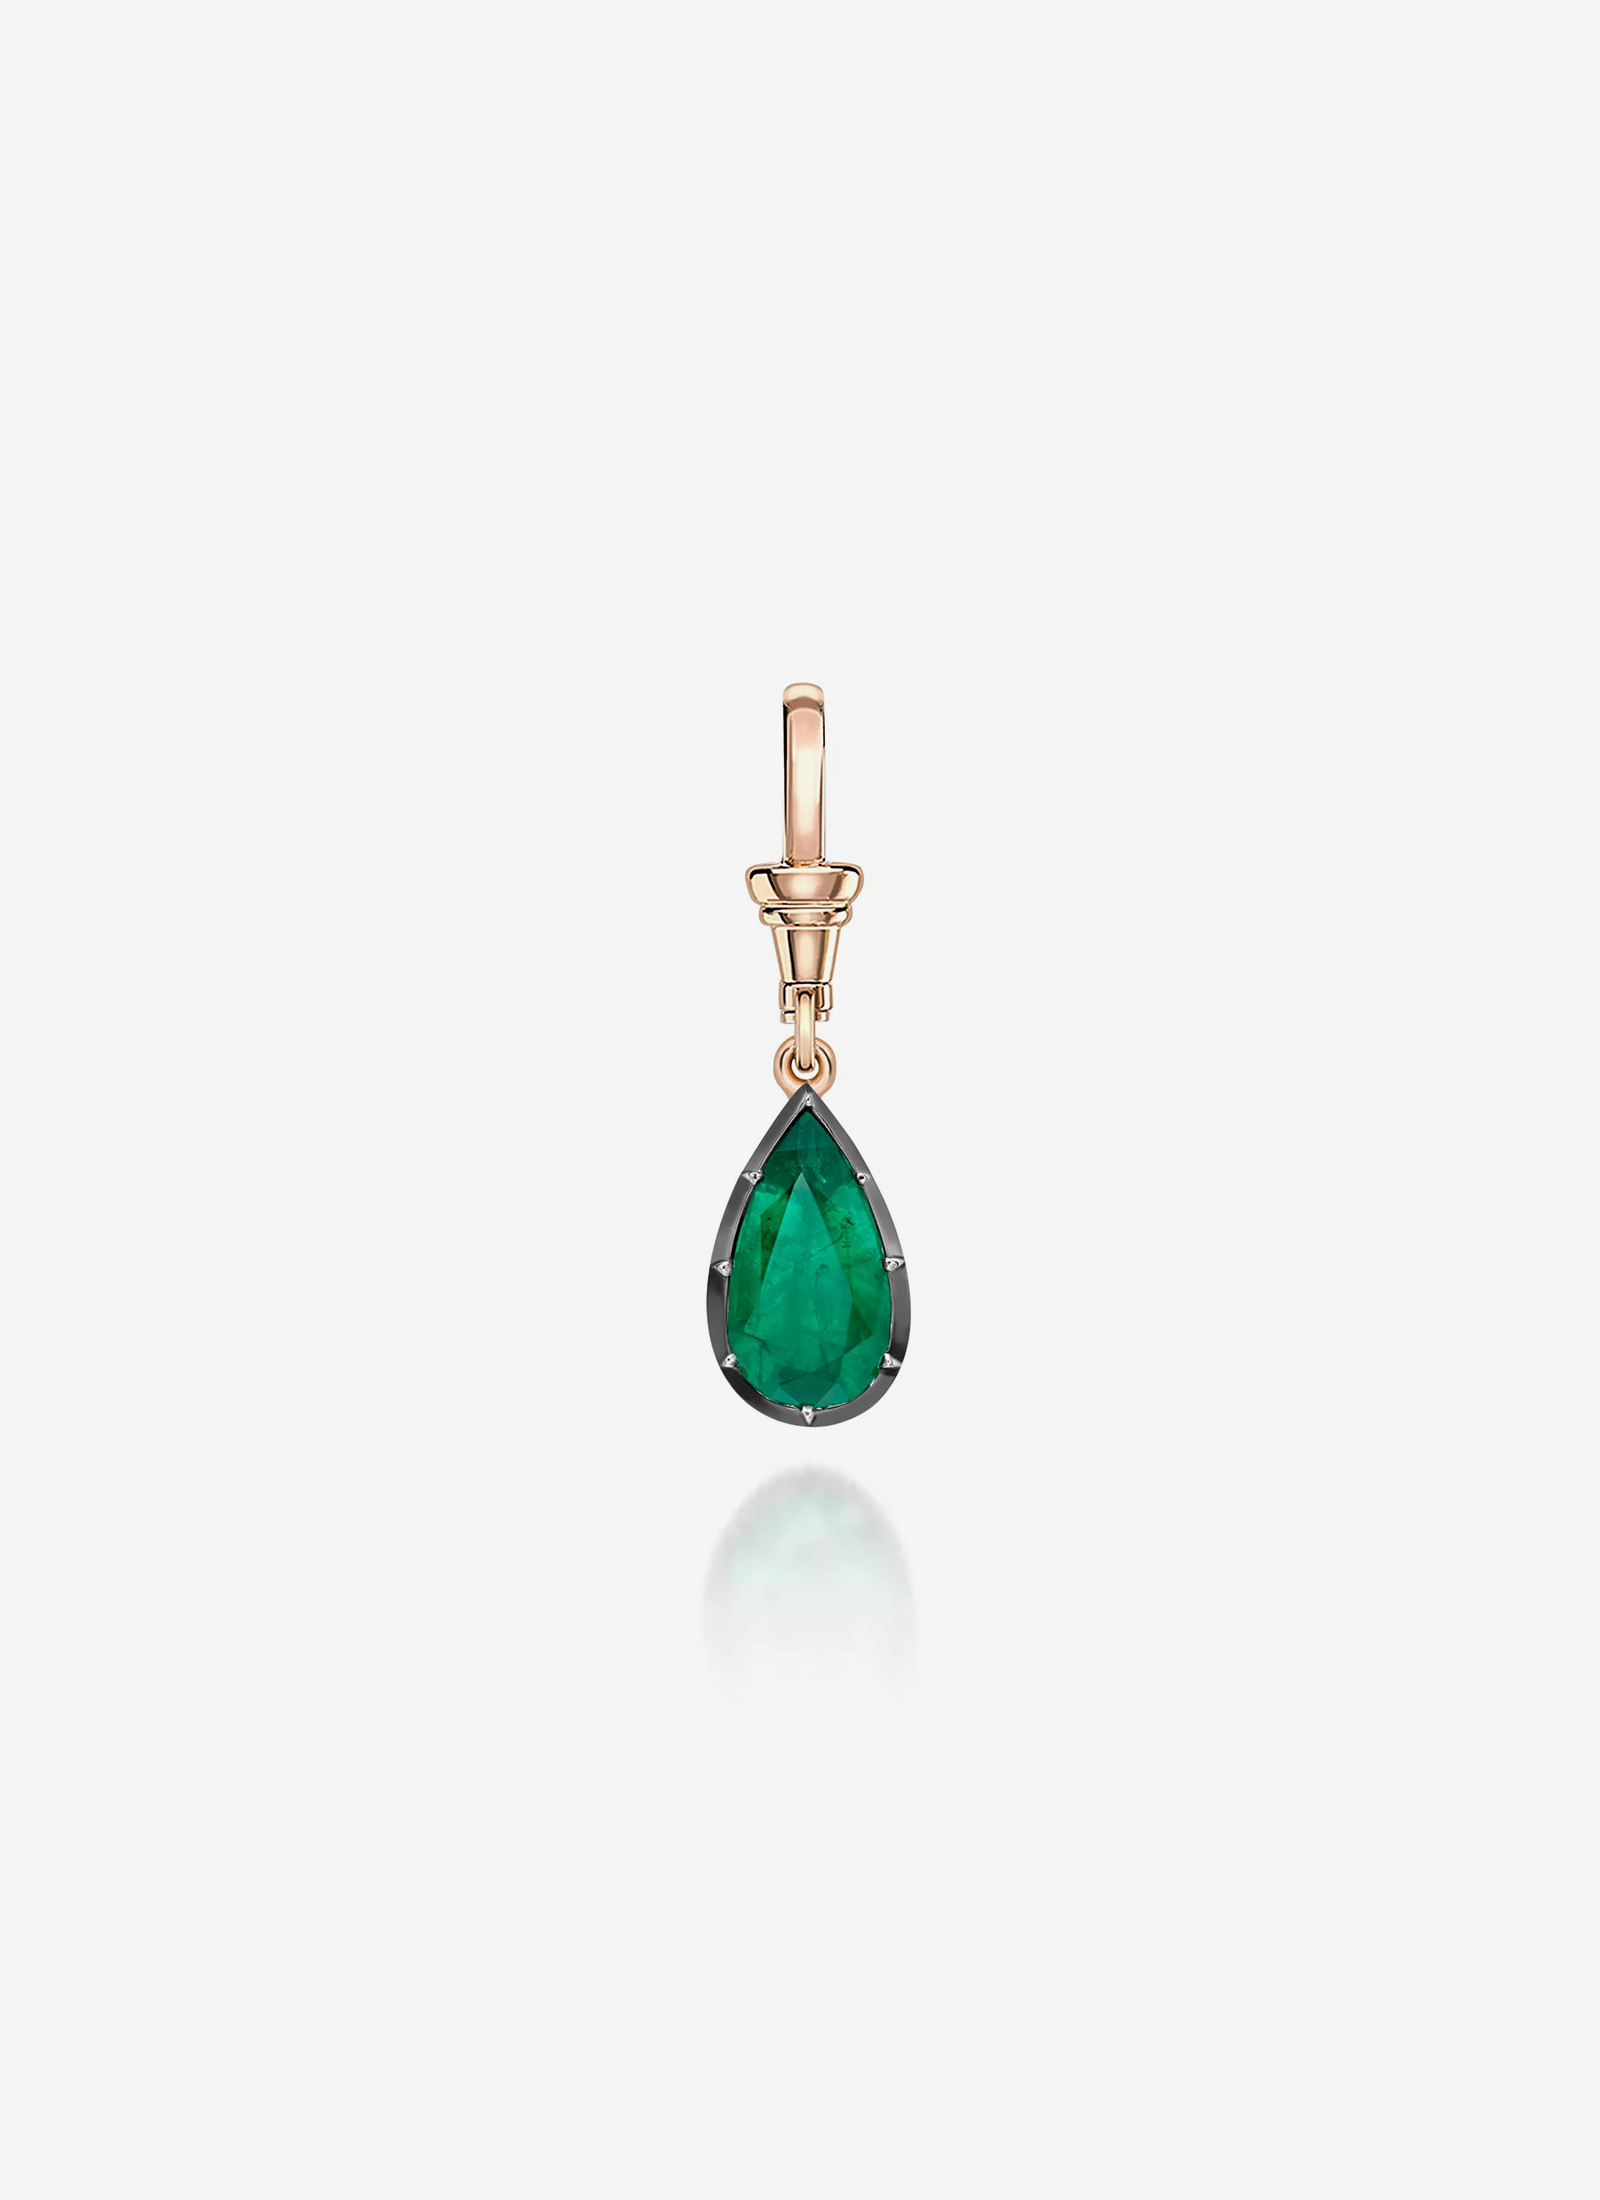 Ball n Chain Pendant - Emerald Pear Shaped 2.49ct